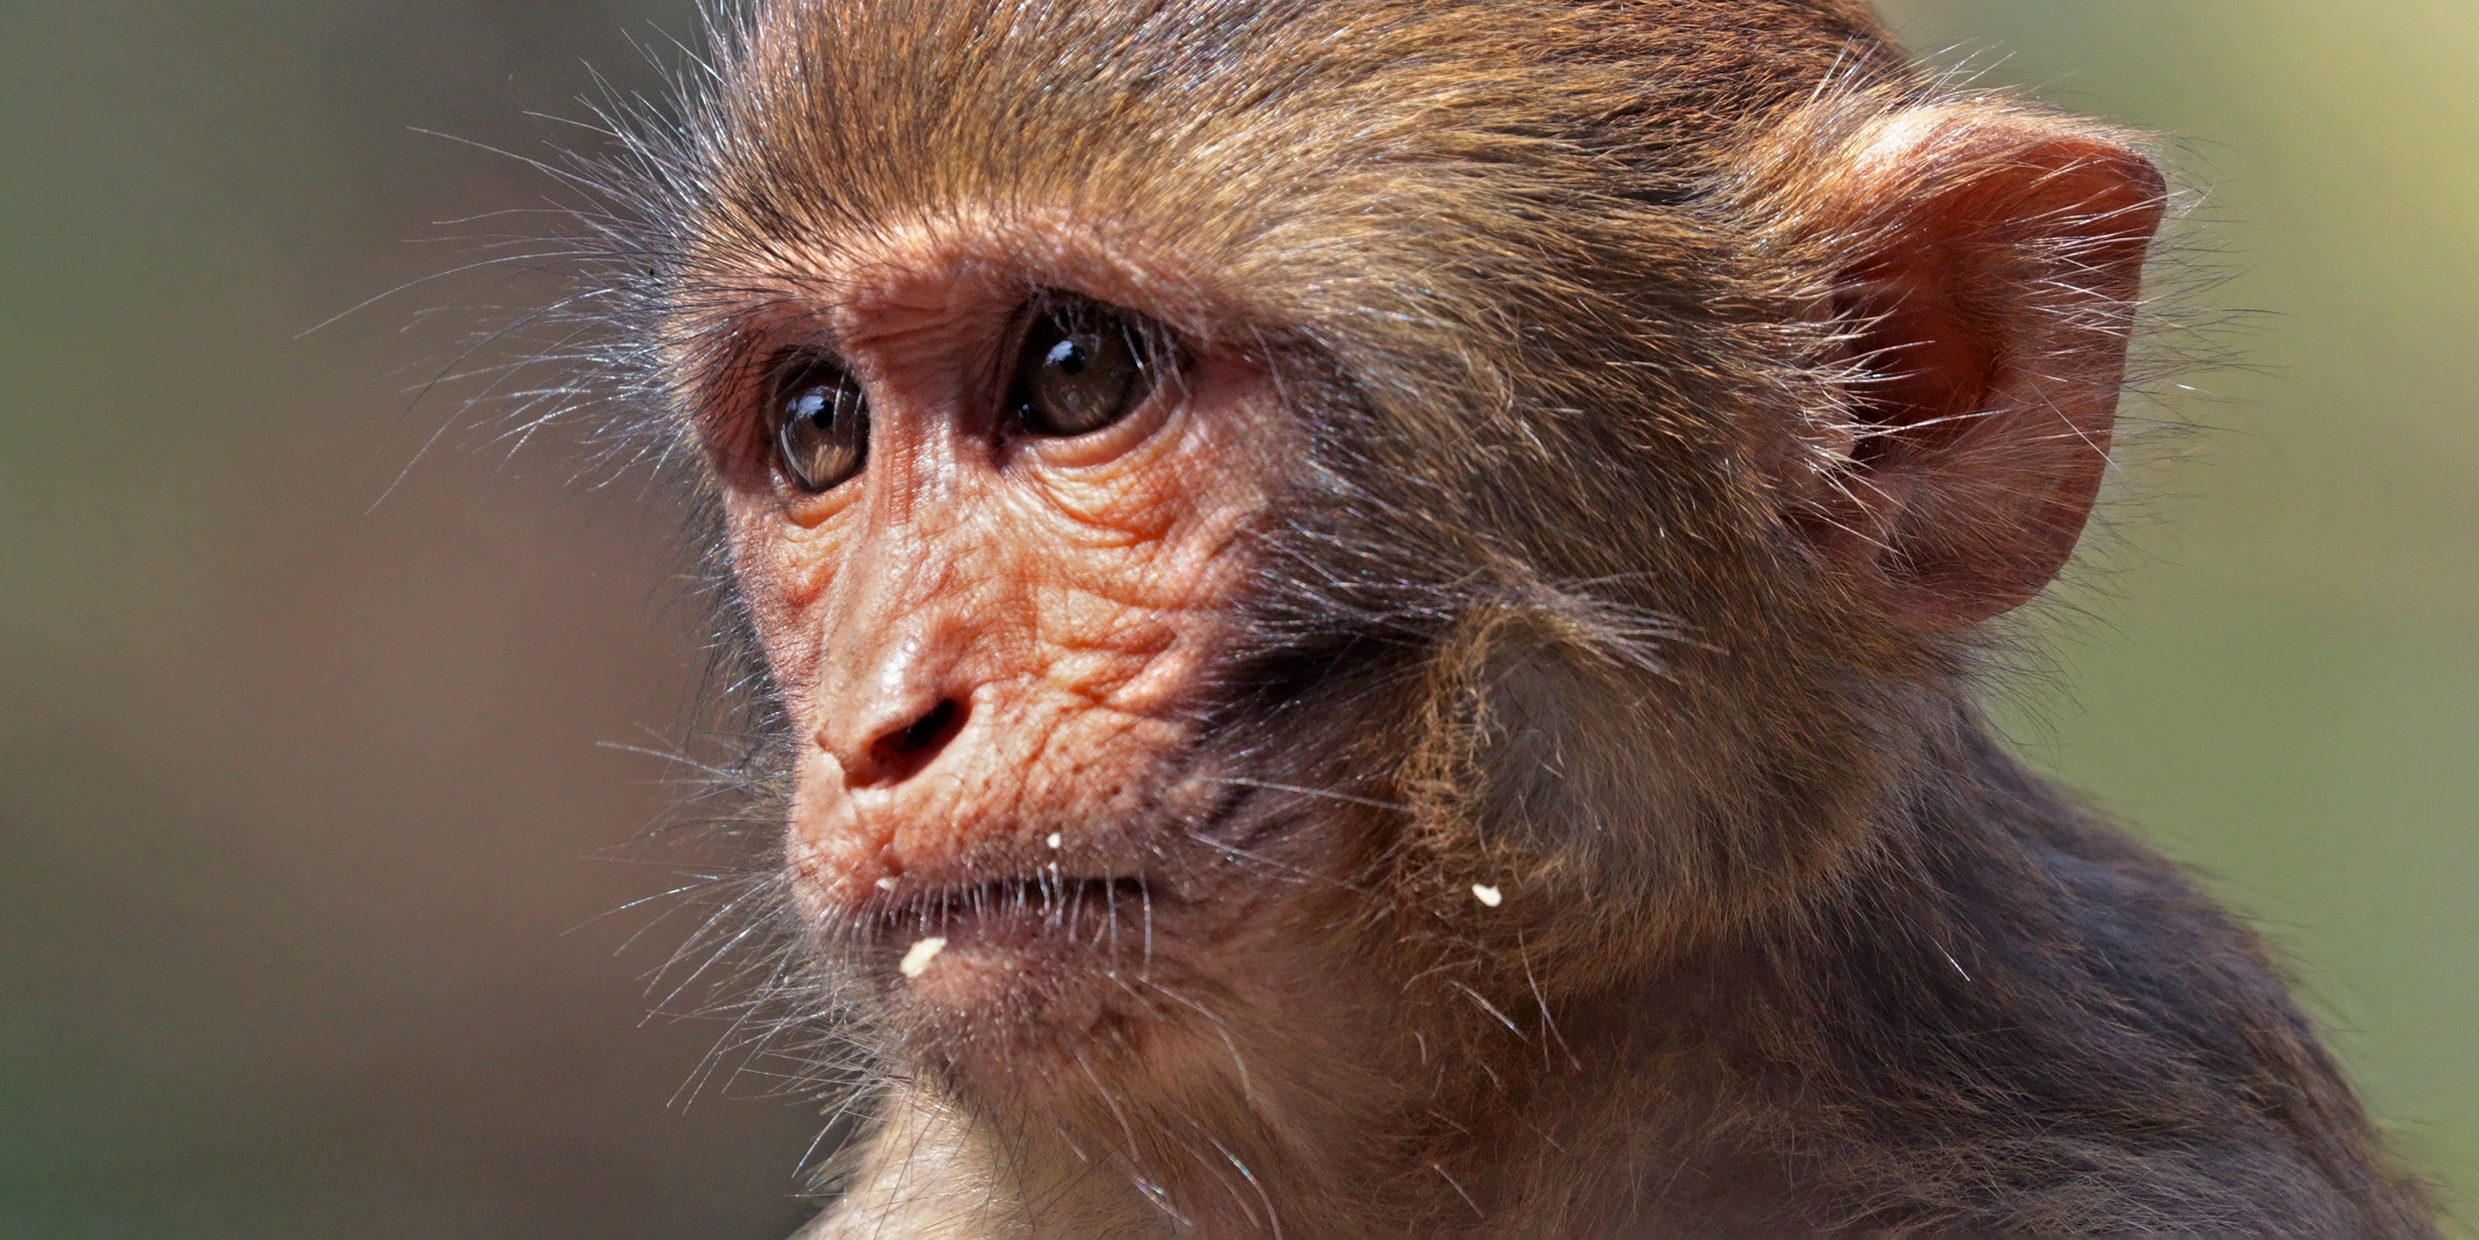 Image of a juvenile Rhesus monkey